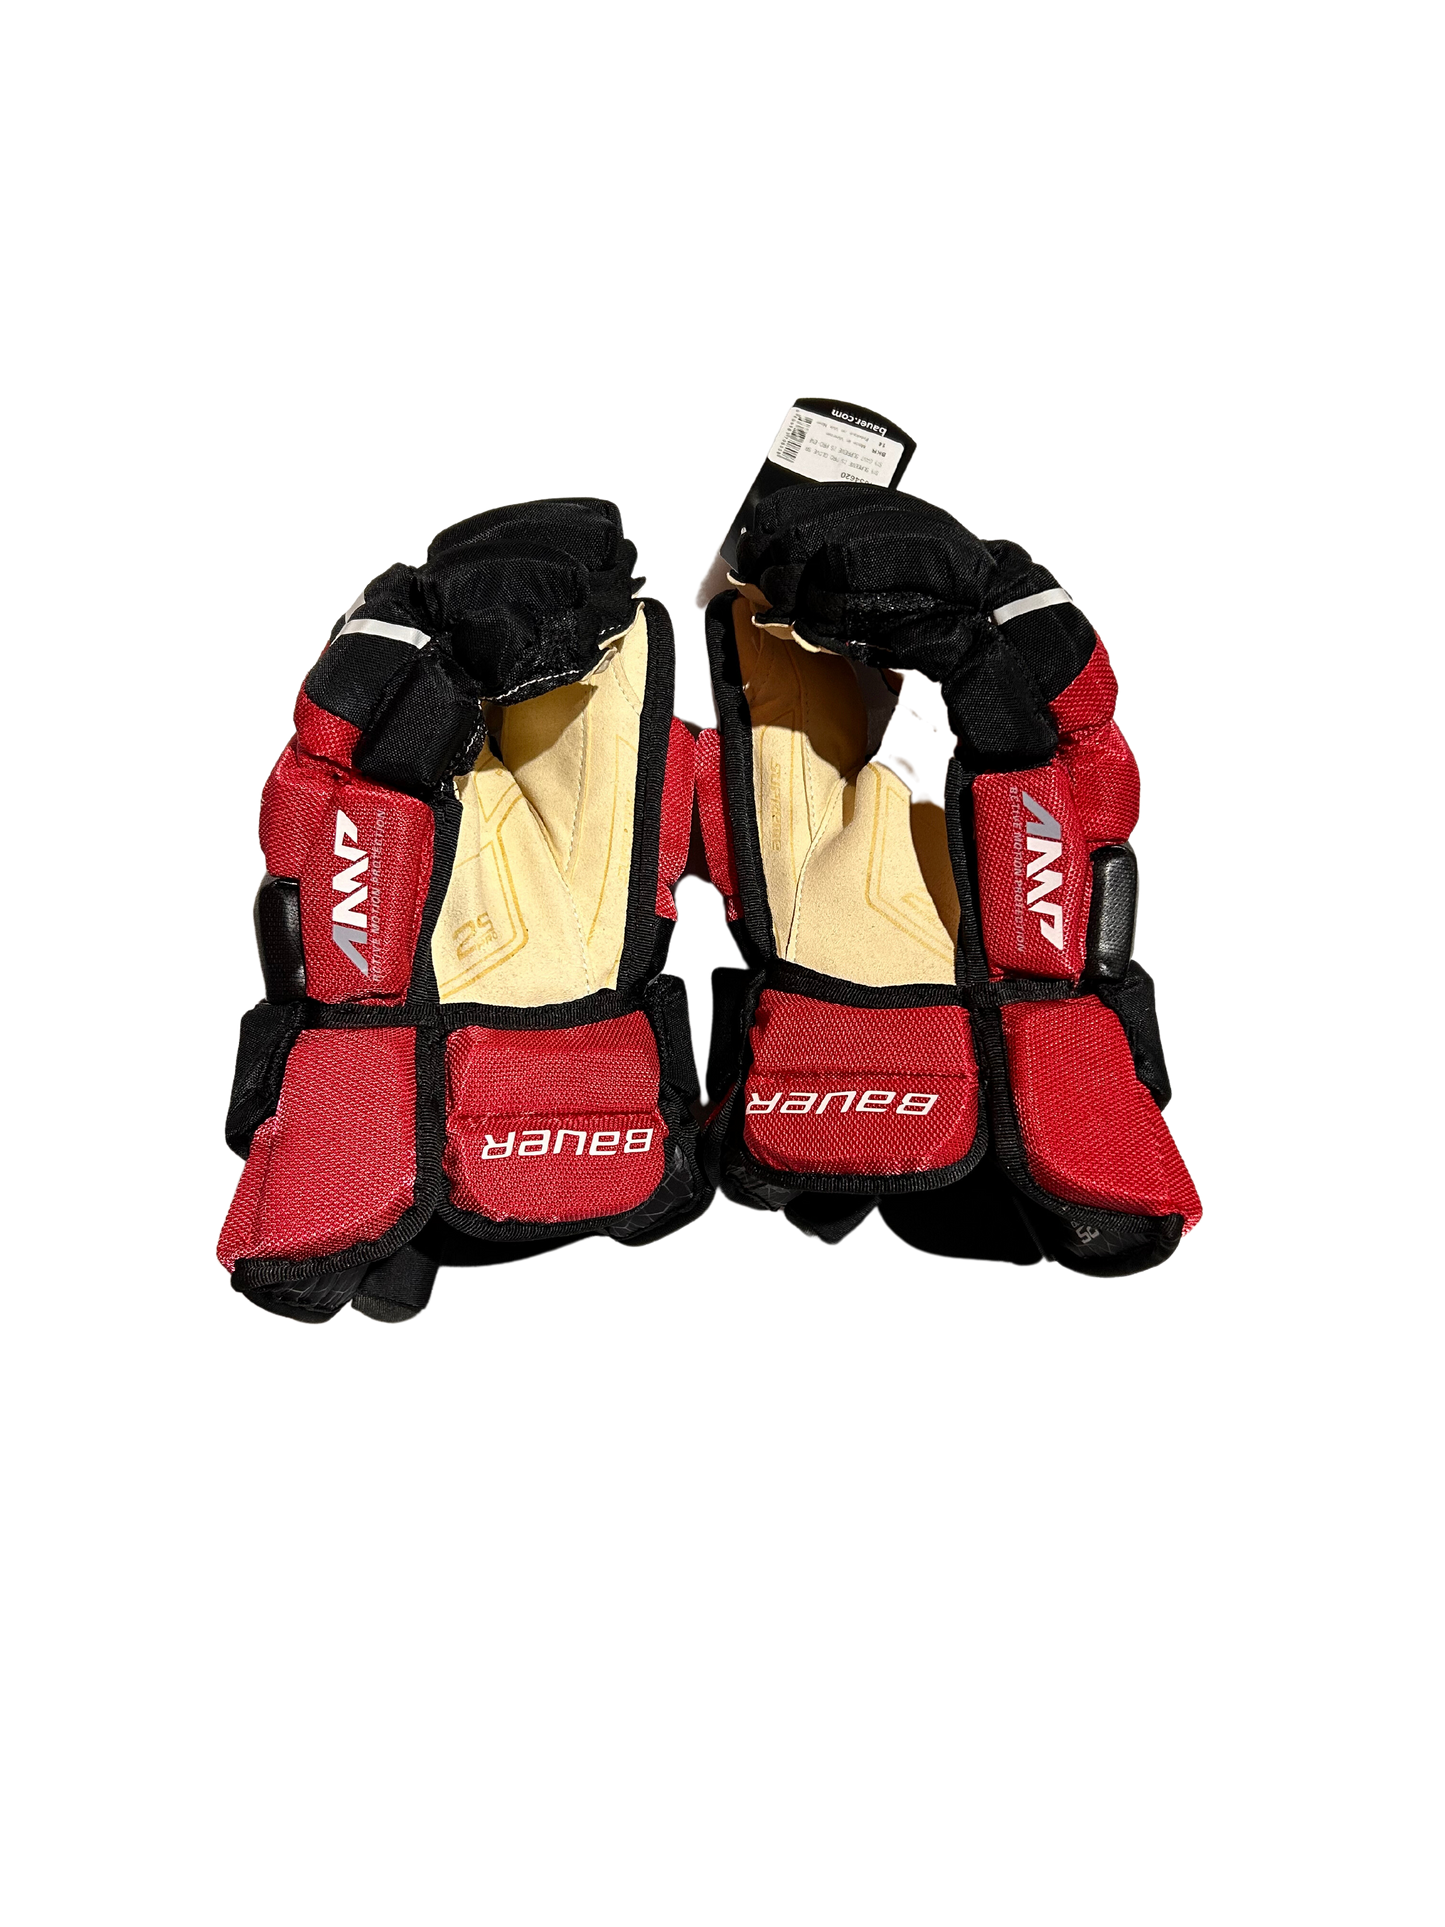 New Red & Black 14" Bauer 2S Pro Gloves